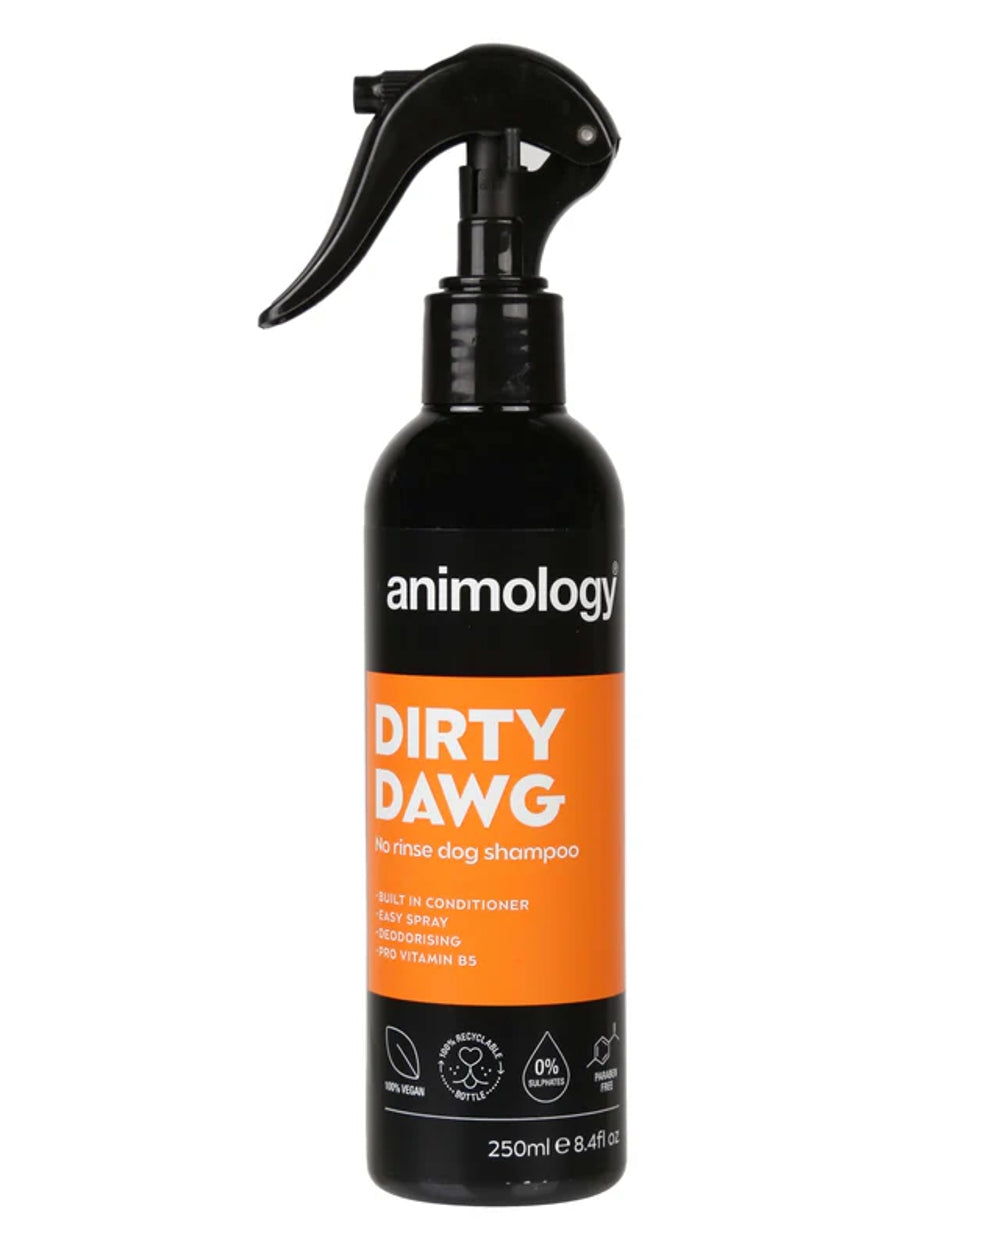 Animology Dirty Dawg No Rinse Shampoo Spray 250ml on white background